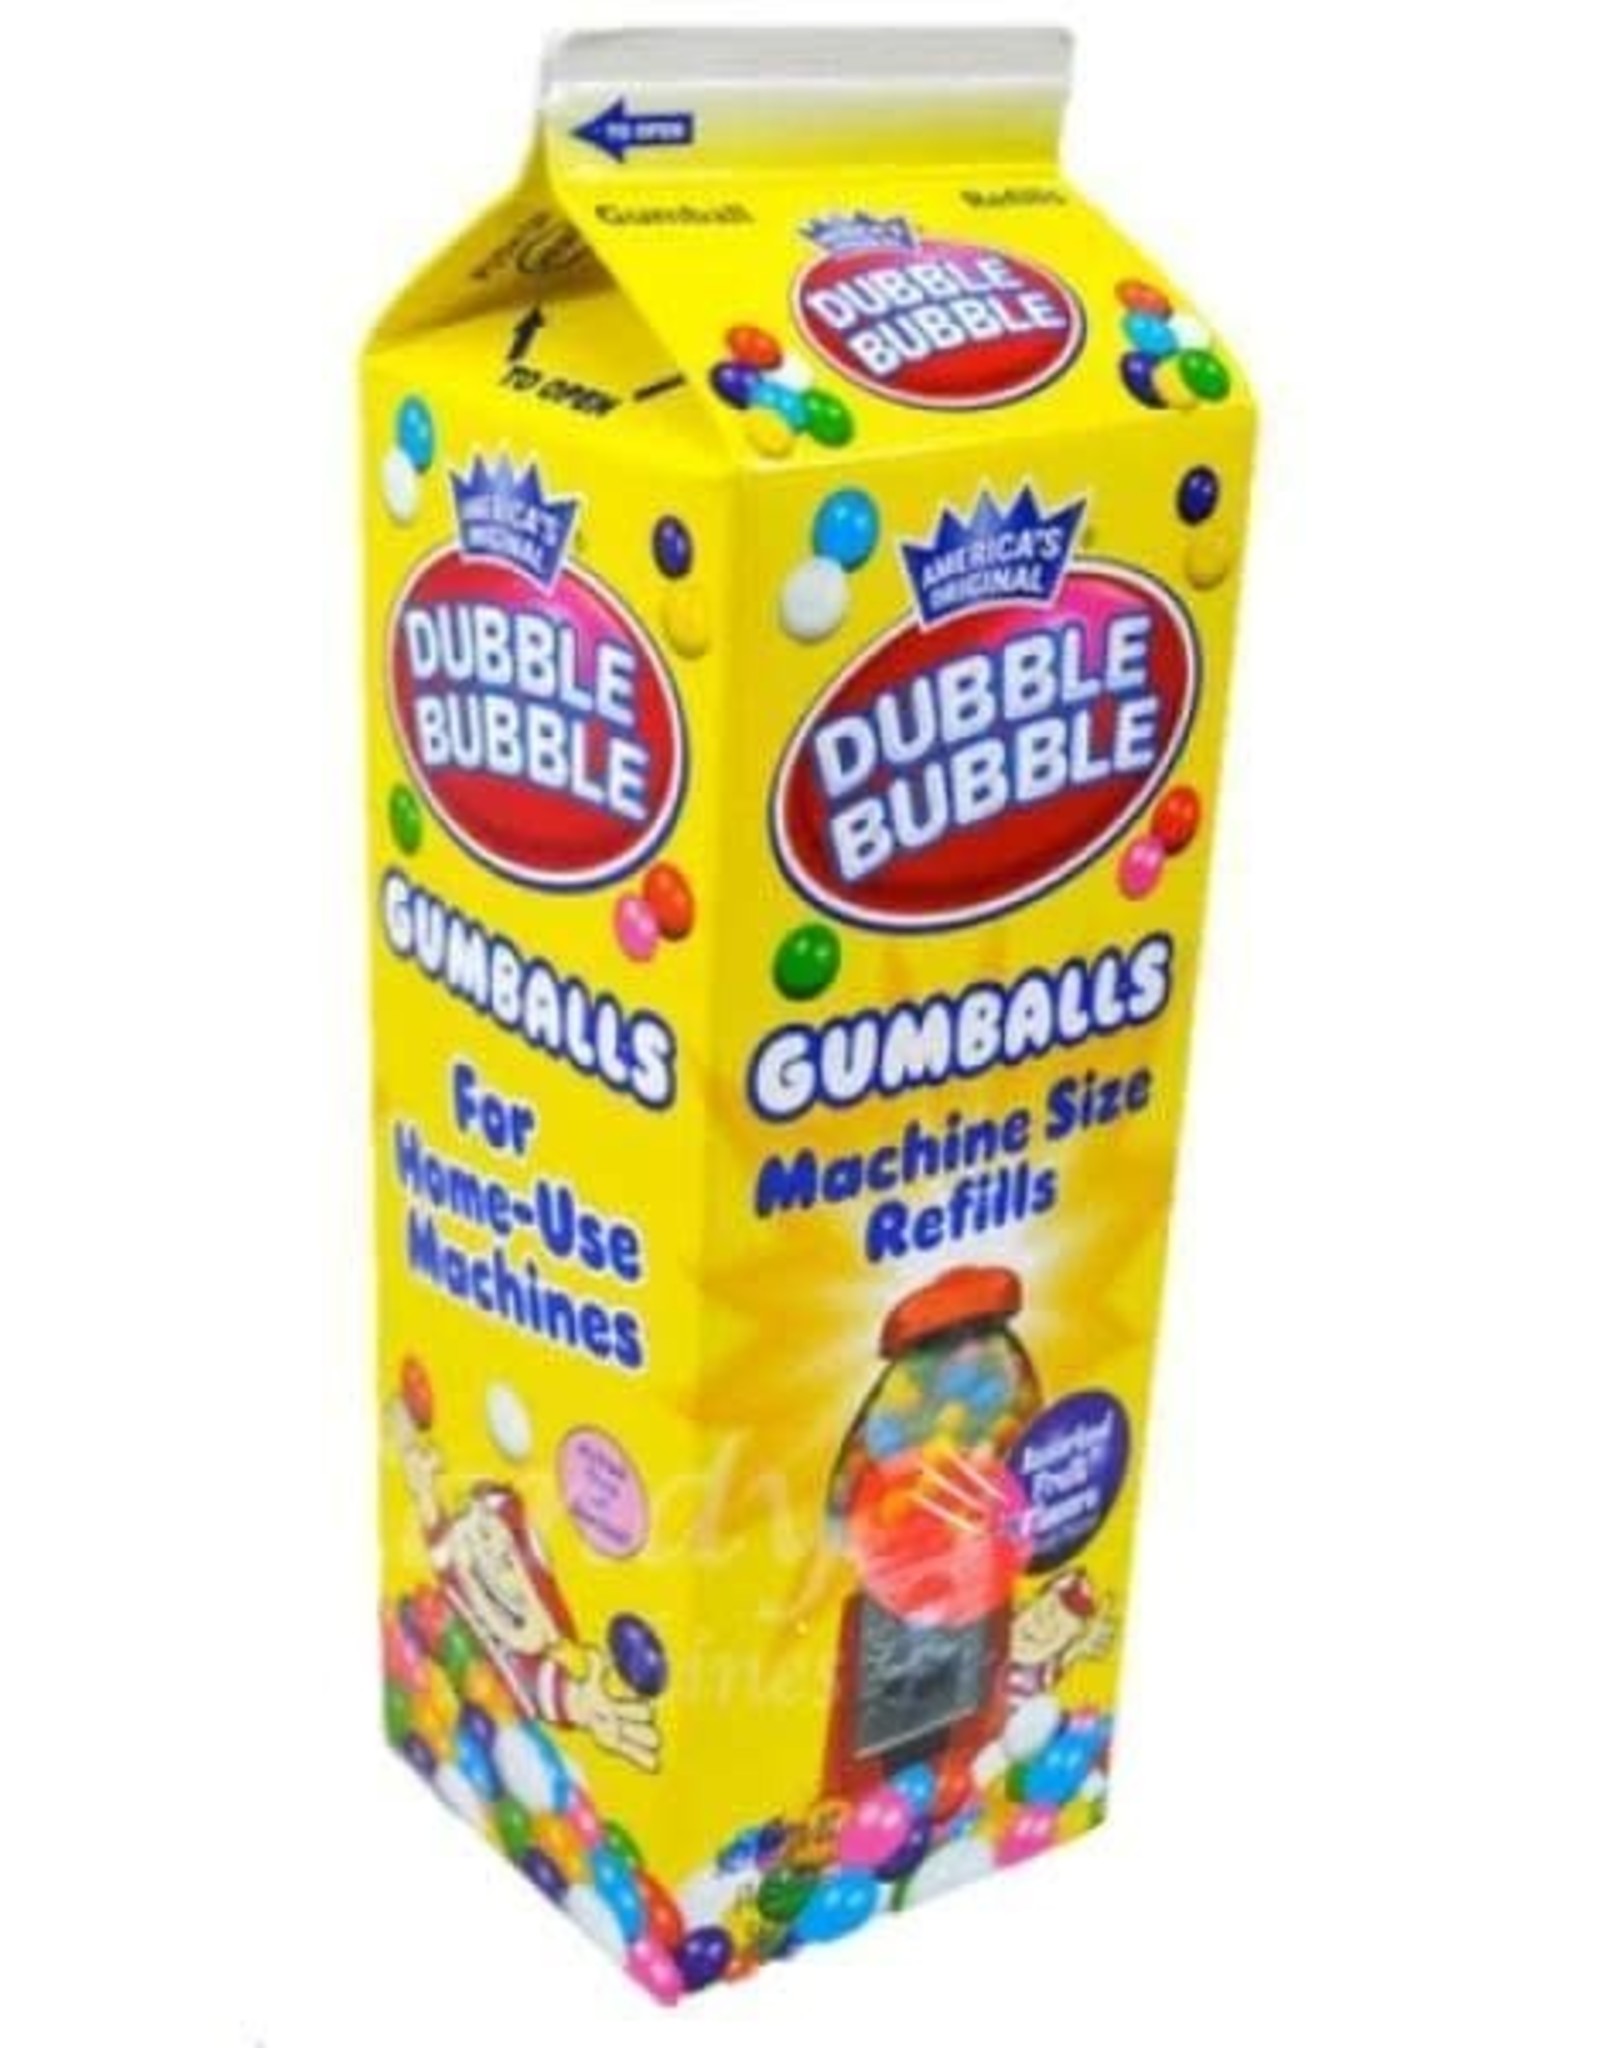 Dubble Bubble Dubble Bubble Gumballs Refill Carton